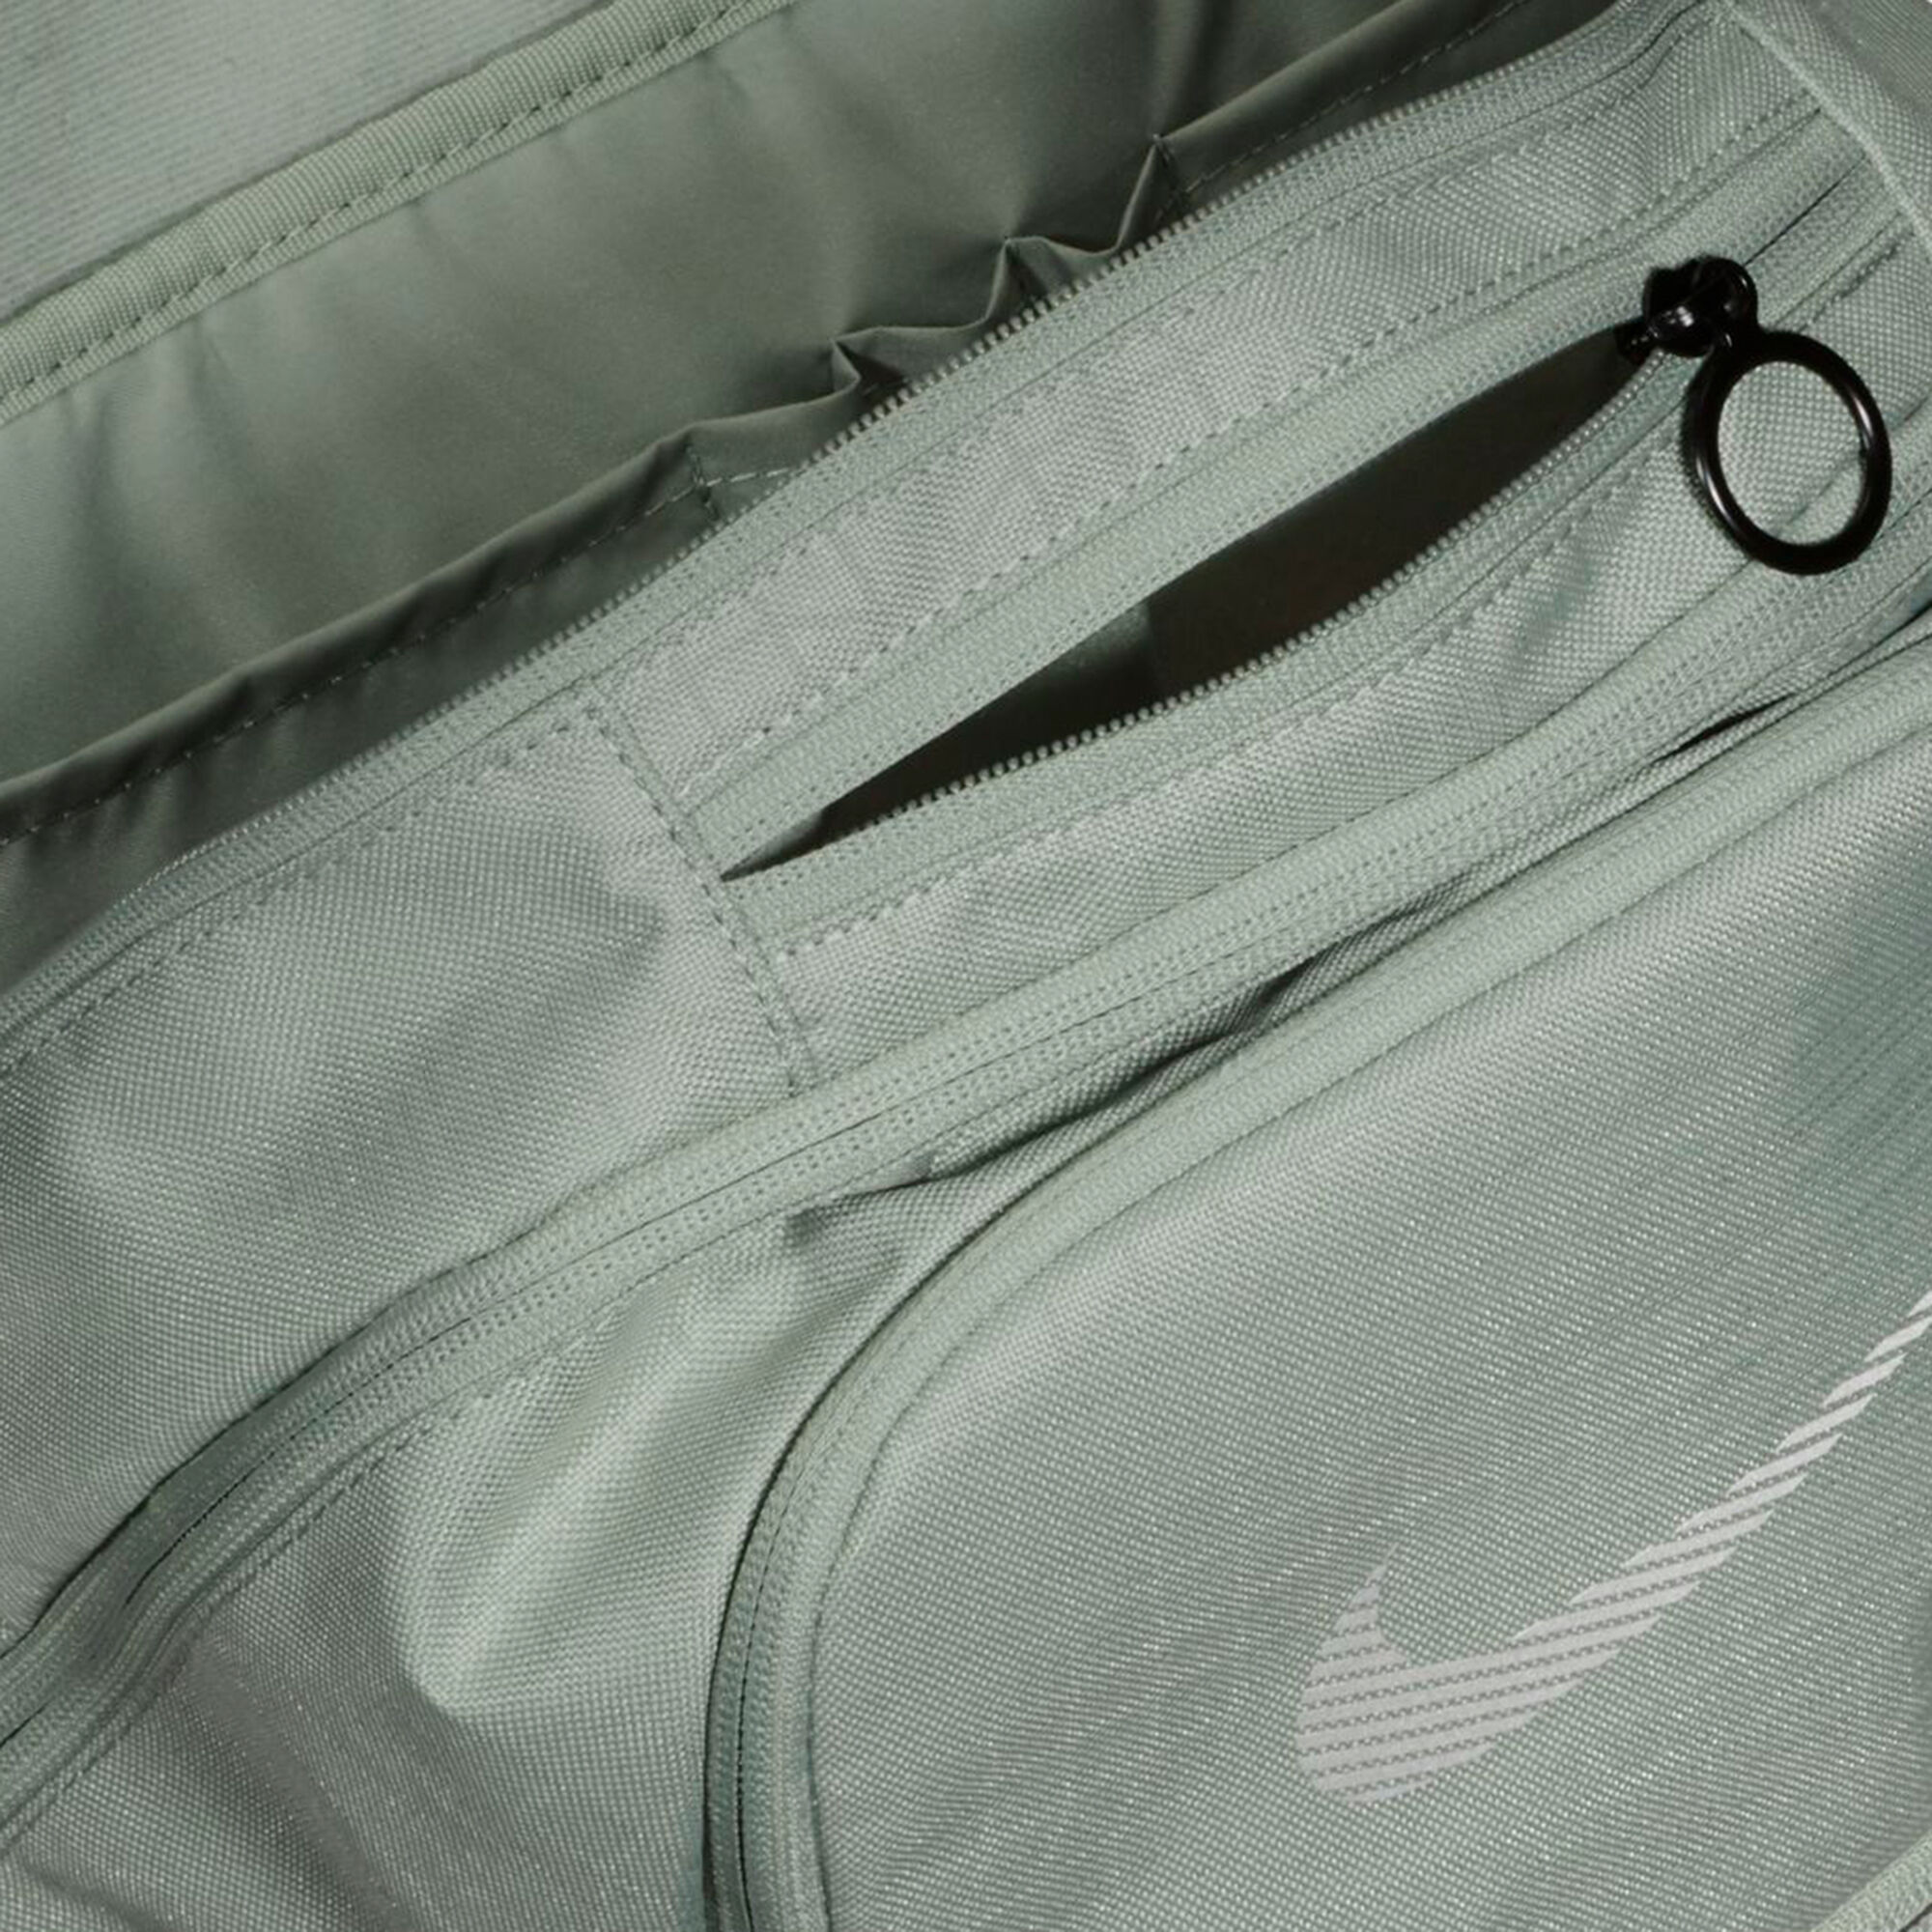 Buy Nike Brasilia Winterized Backpack Lightgrey, Black online